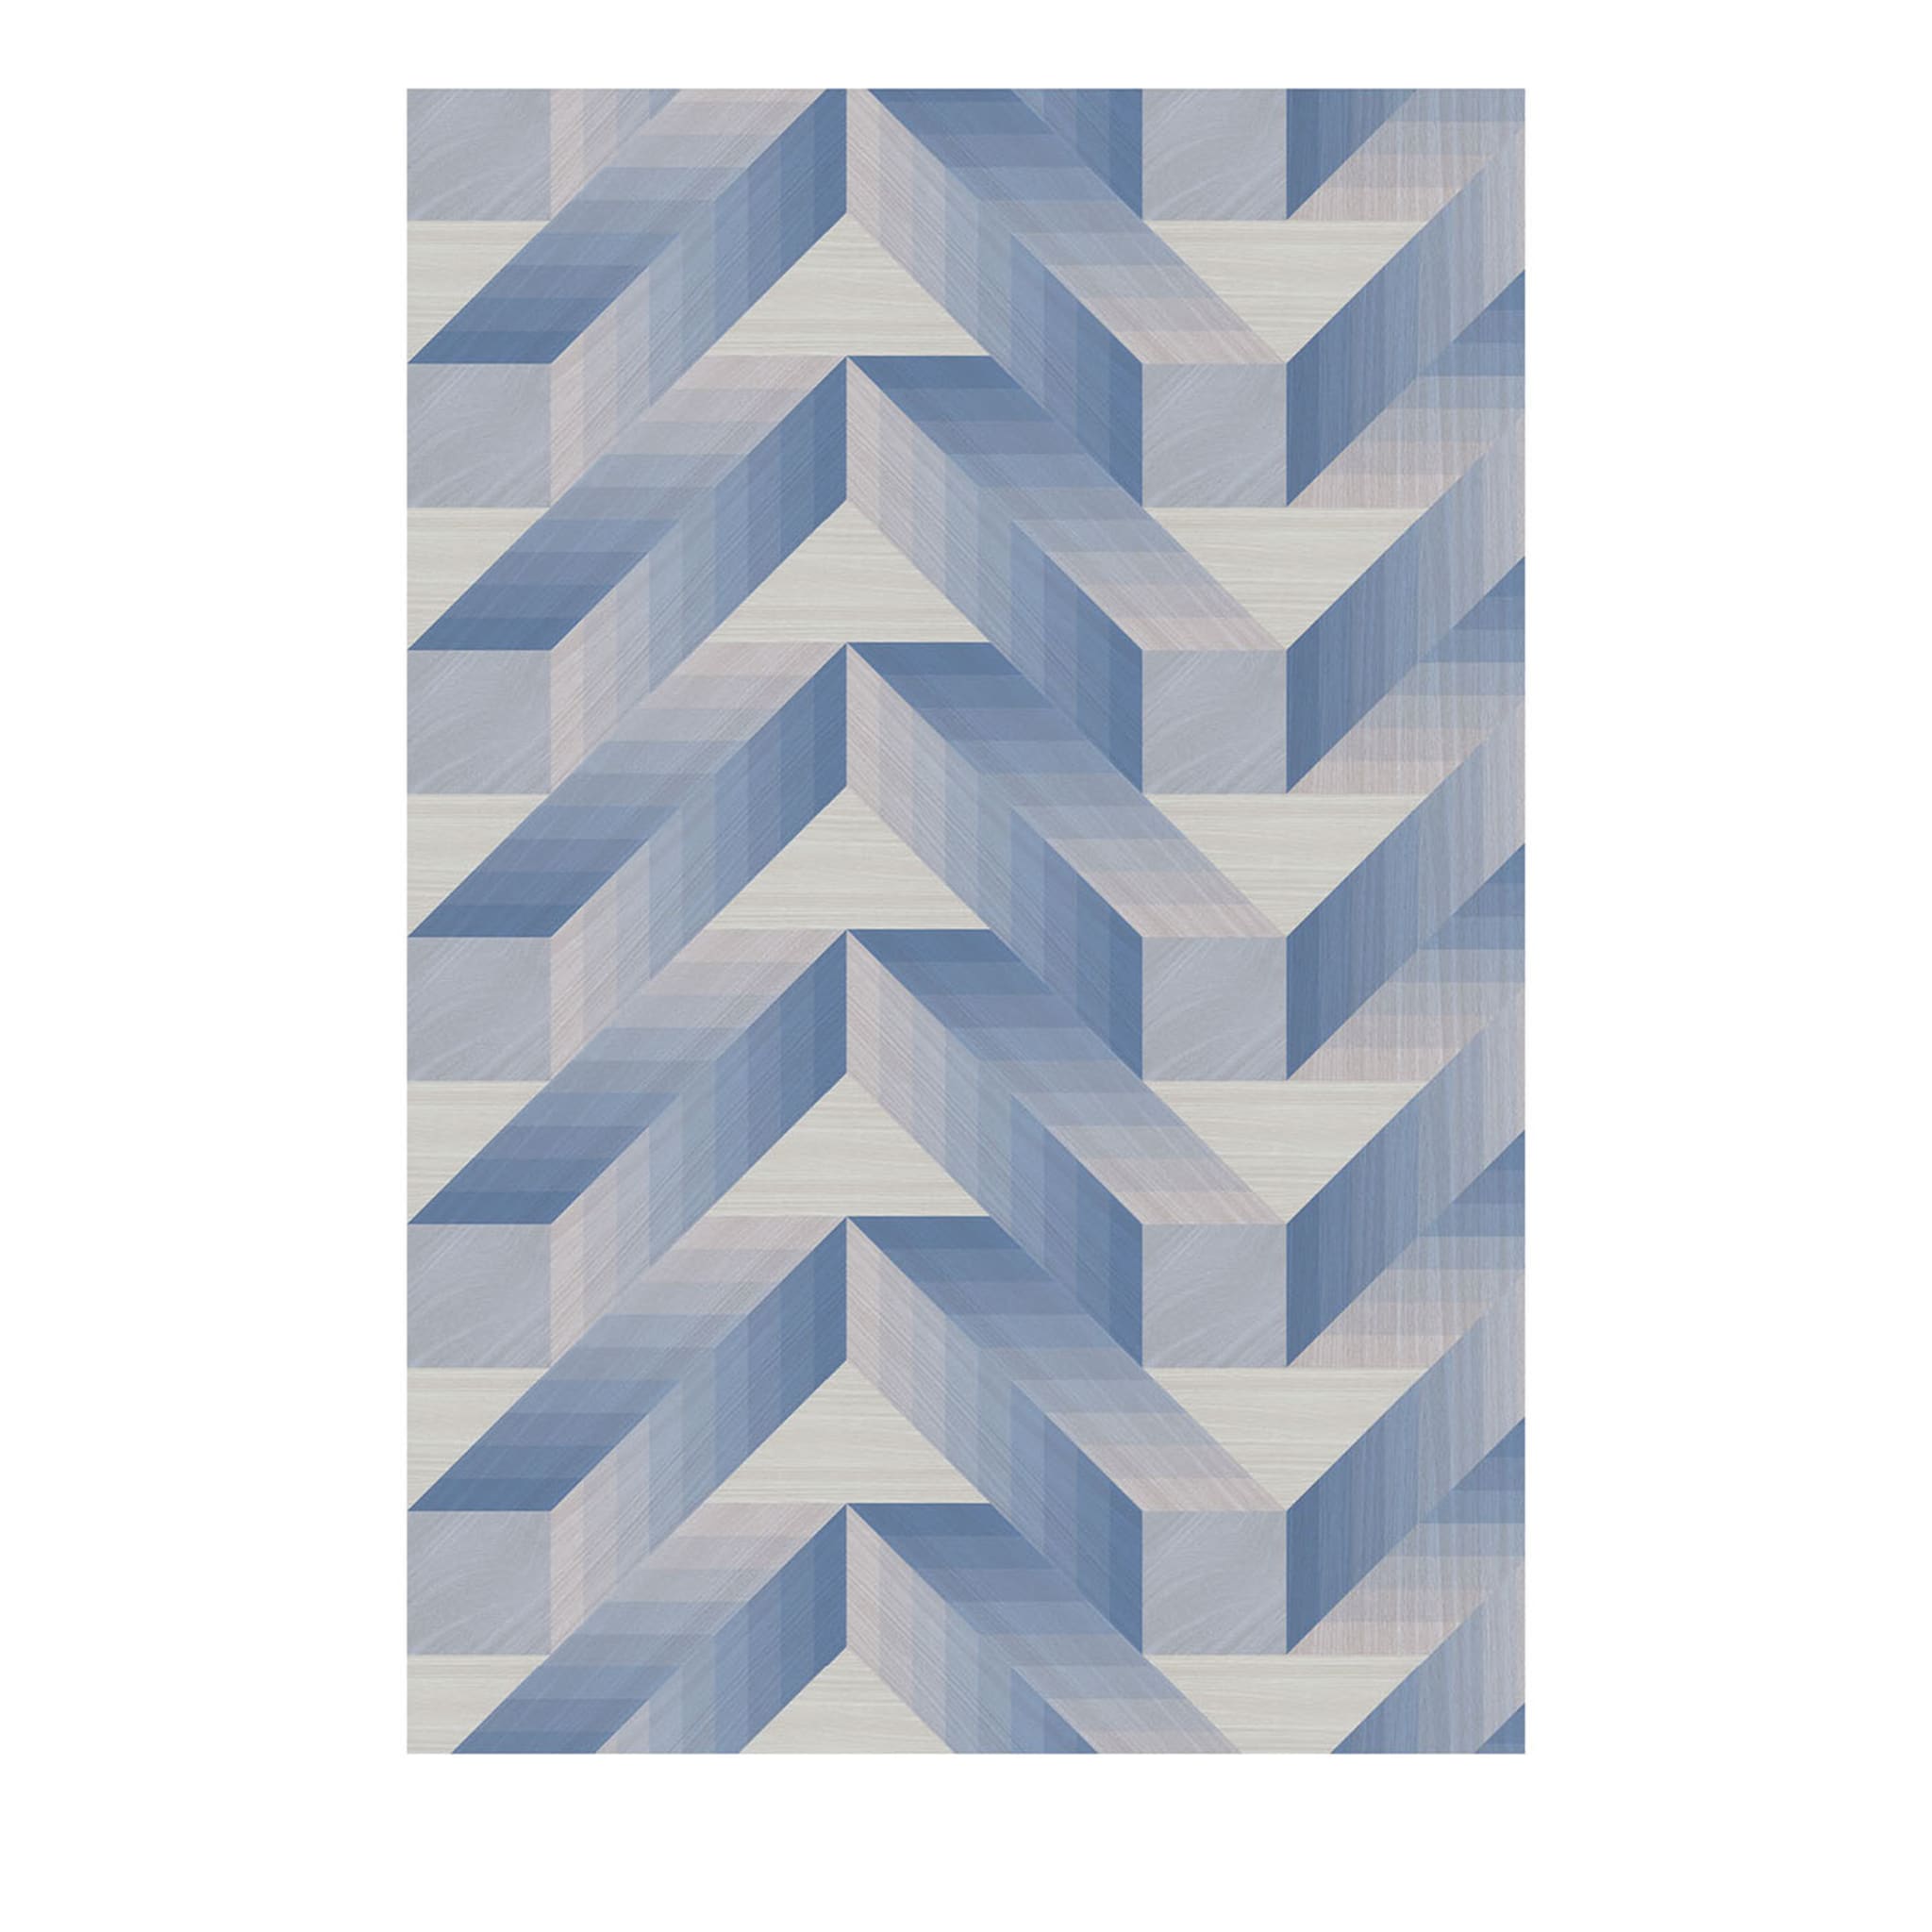 Geometry Cubes Blue Wallpaper - Main view